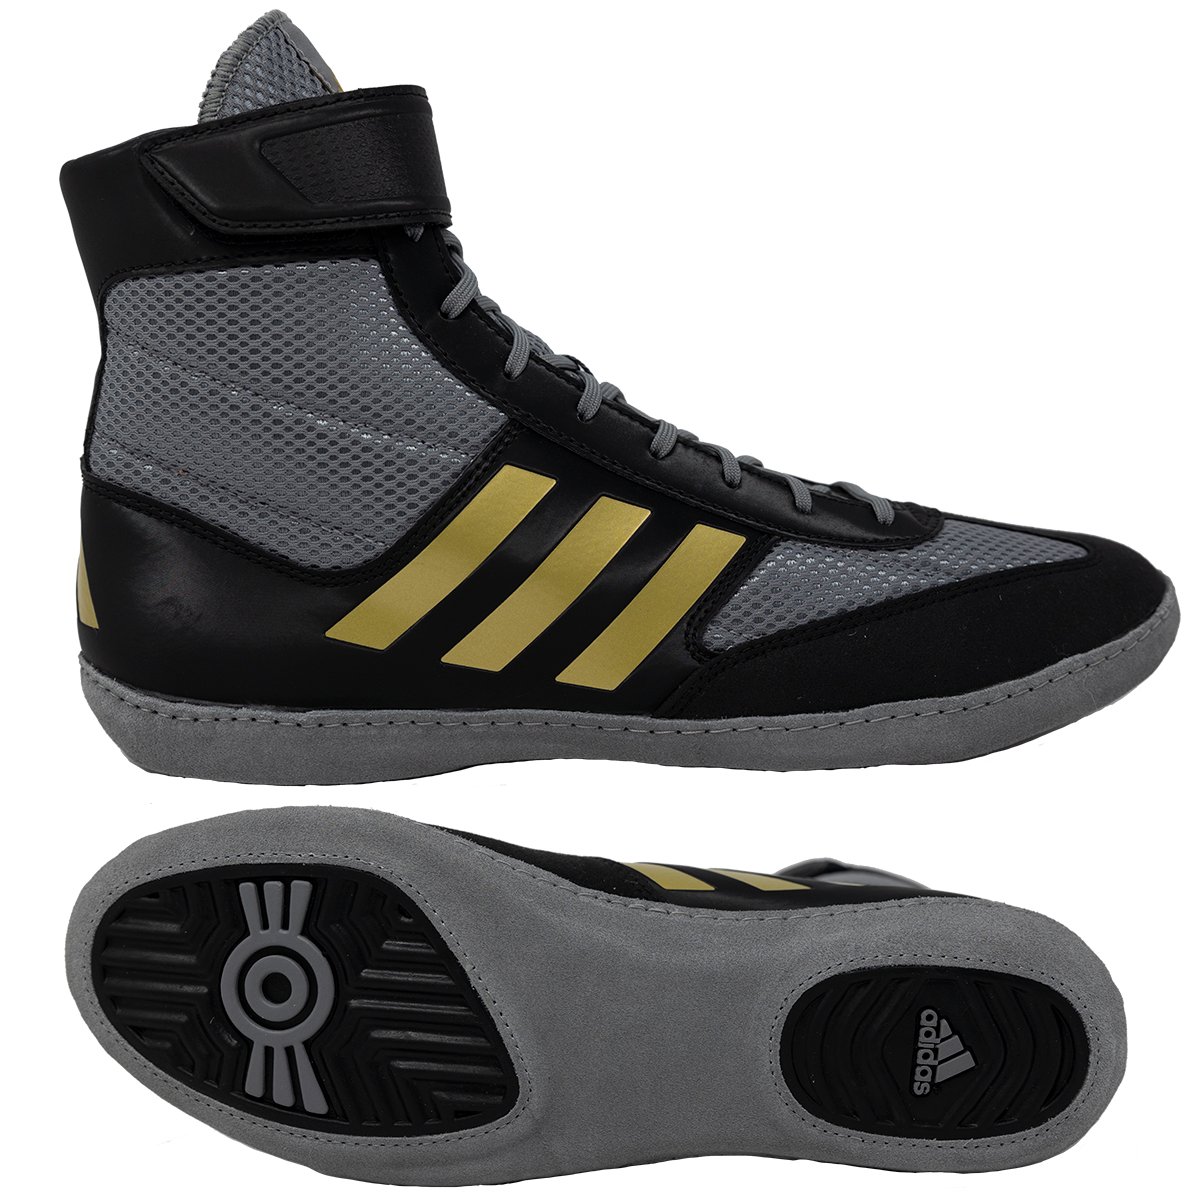 NEW-Adidas Combat Speed 5 Wrestling Shoe, color: Grey/Black/Gold